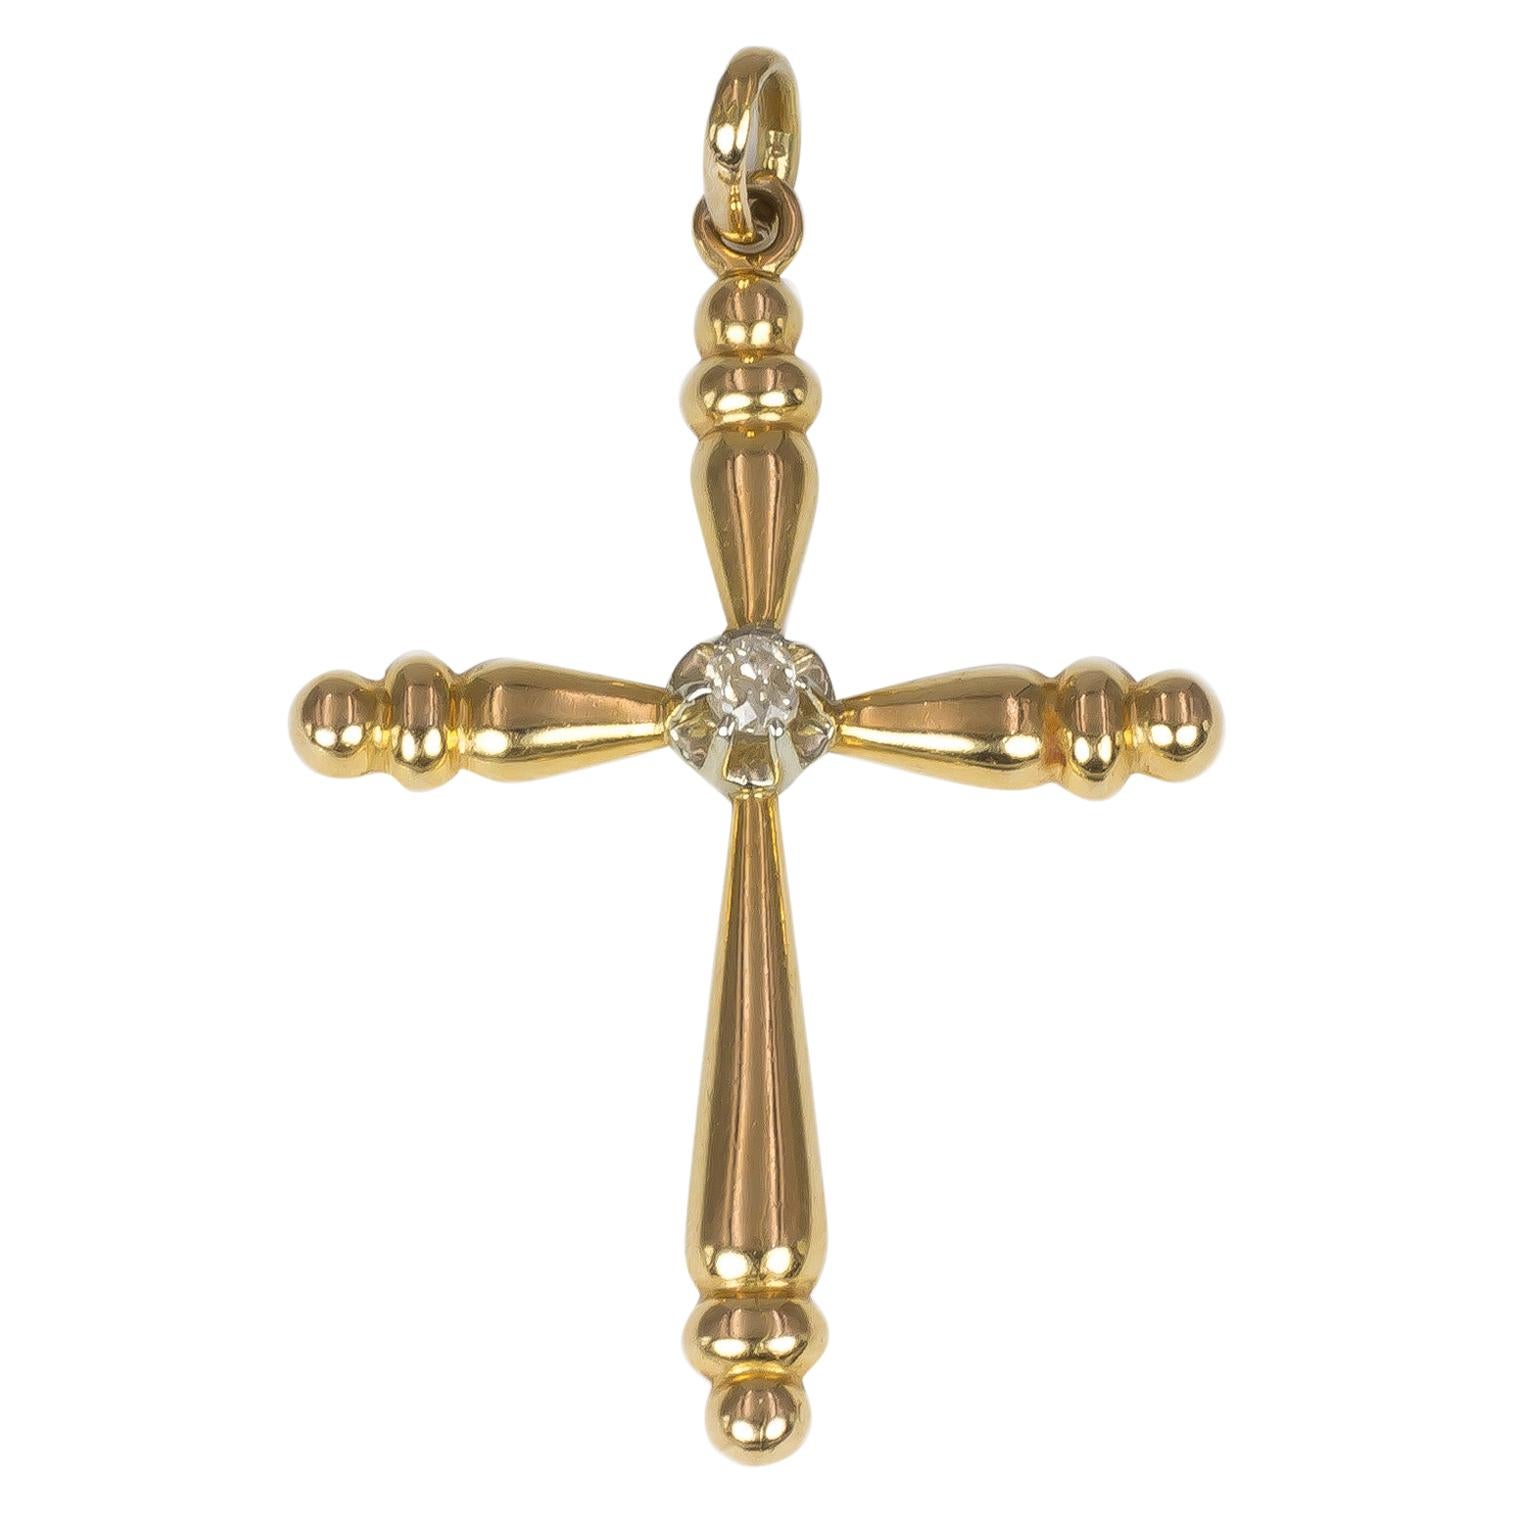 Antique Gold and Diamond Crucifix Pendant, 1940s